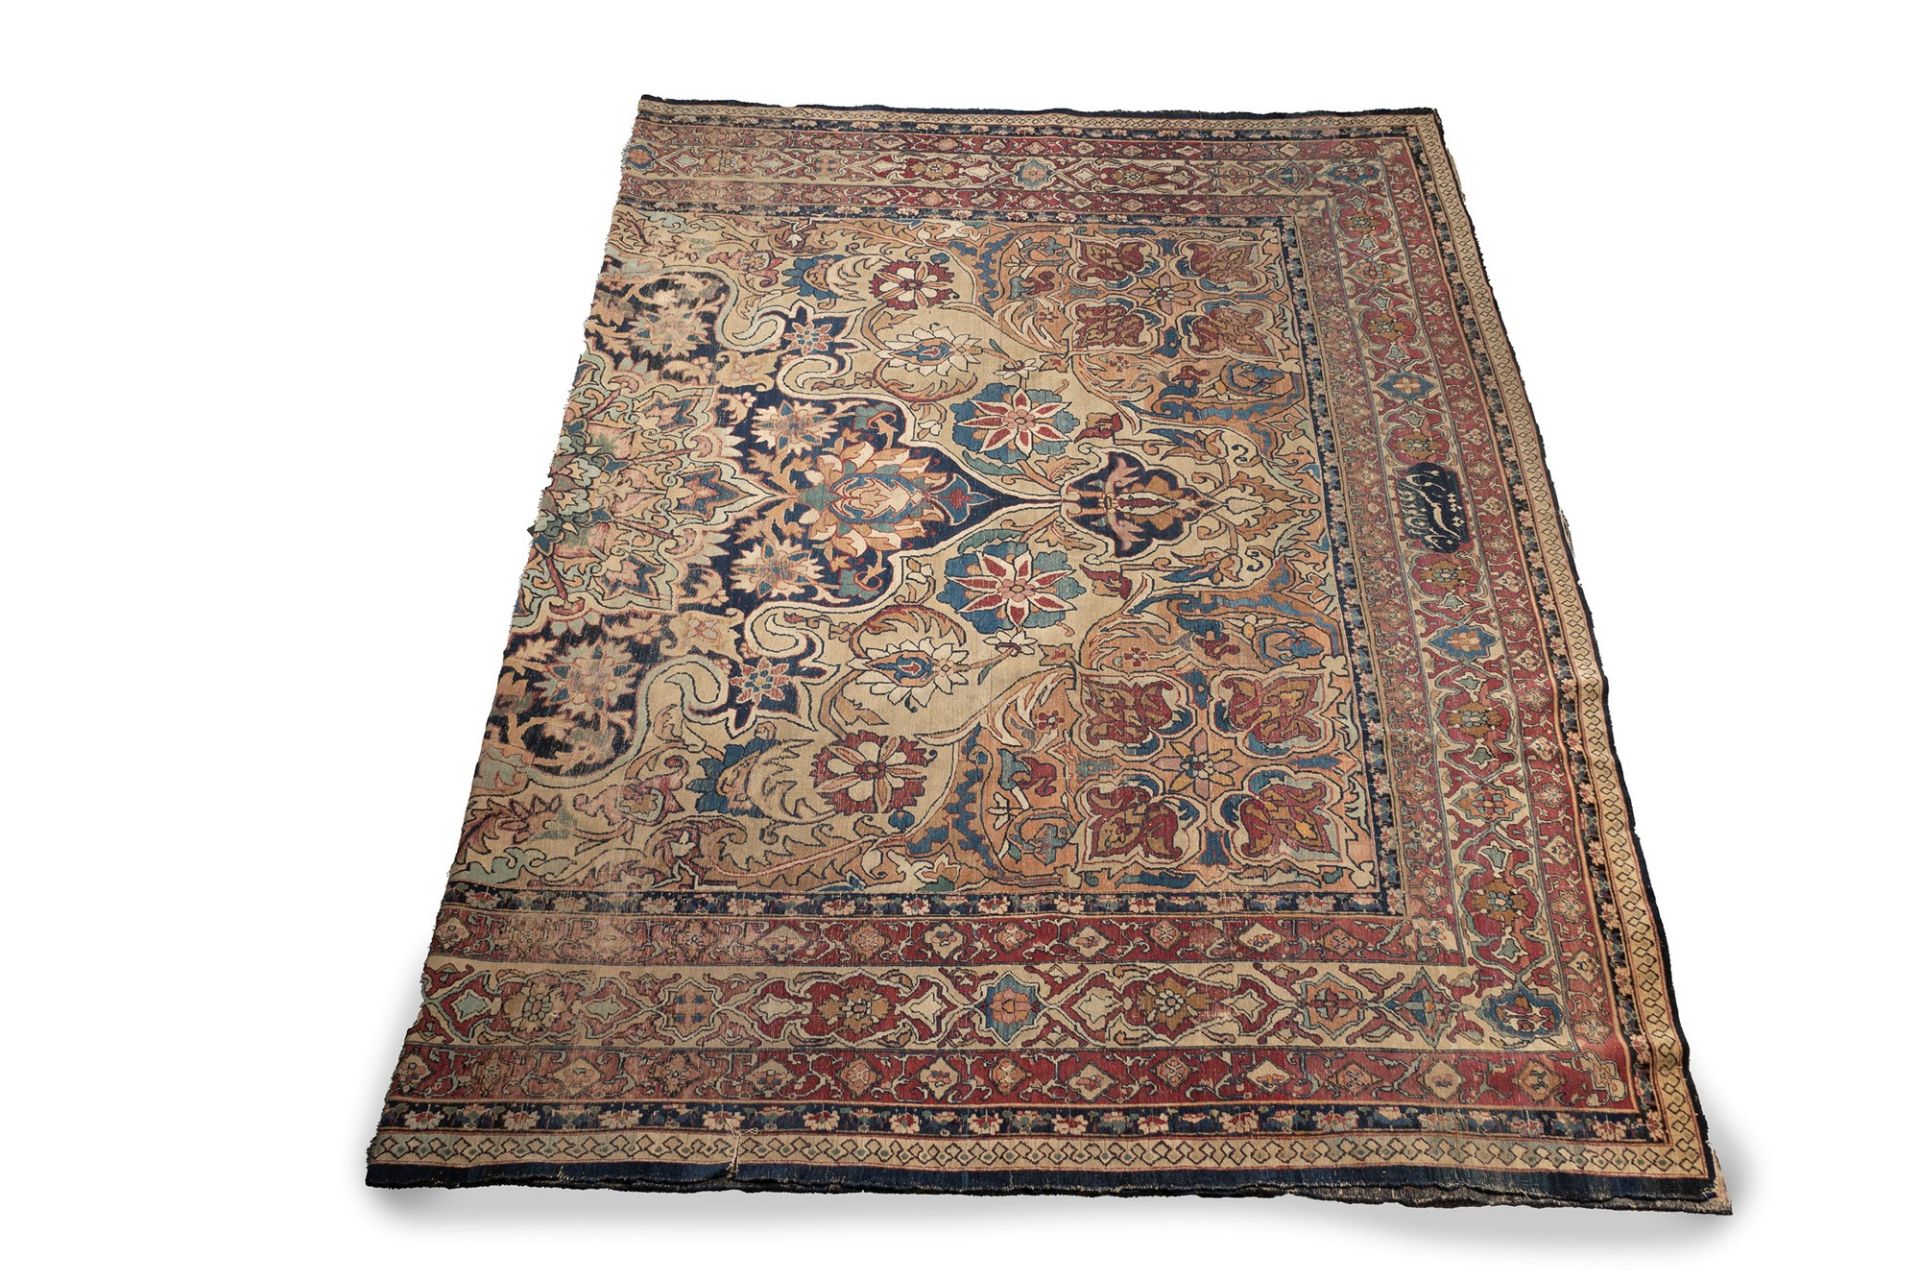 Kirman carpet, Persia, early 20th century - Image 2 of 4